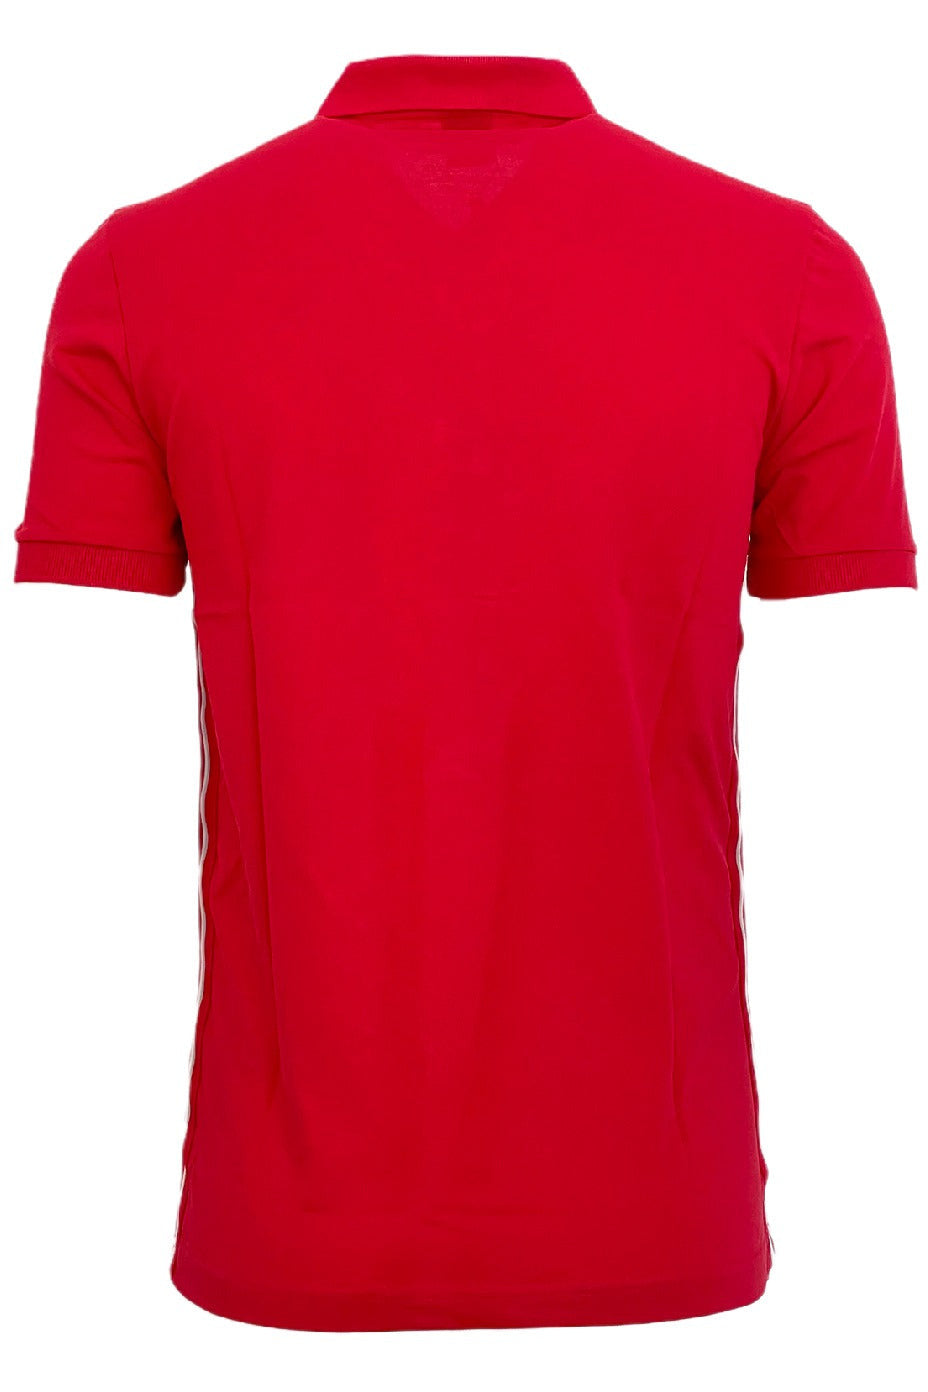 Hugo Boss Polo Shirt in Red